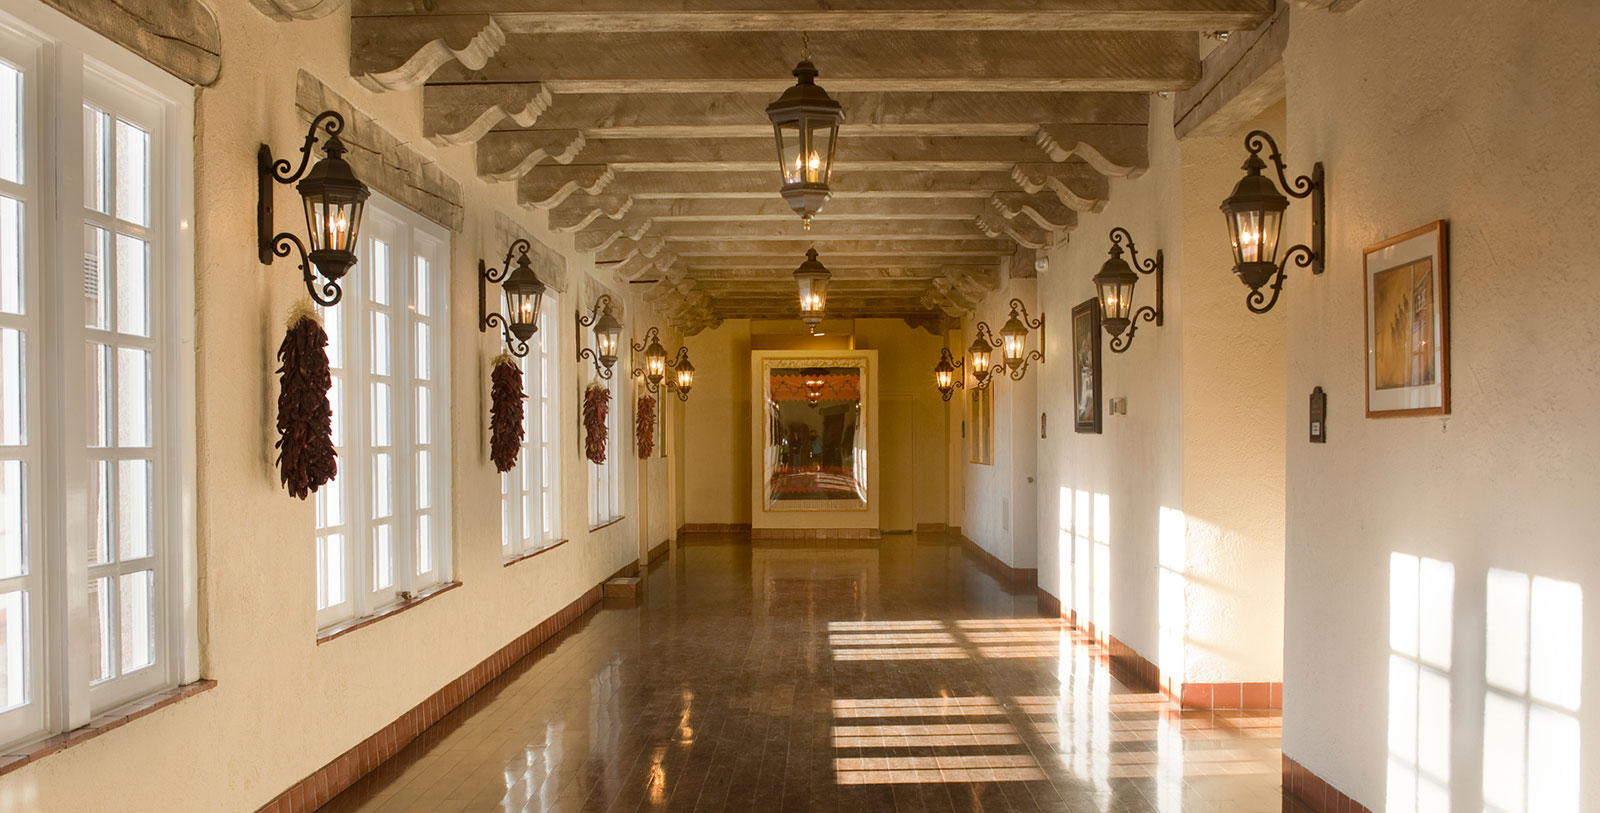 Image of Hotel Lobby, Hilton Santa Fe Historic Plaza in Santa Fe, New Mexico, 1625, Member of Historic Hotels of America, Discover